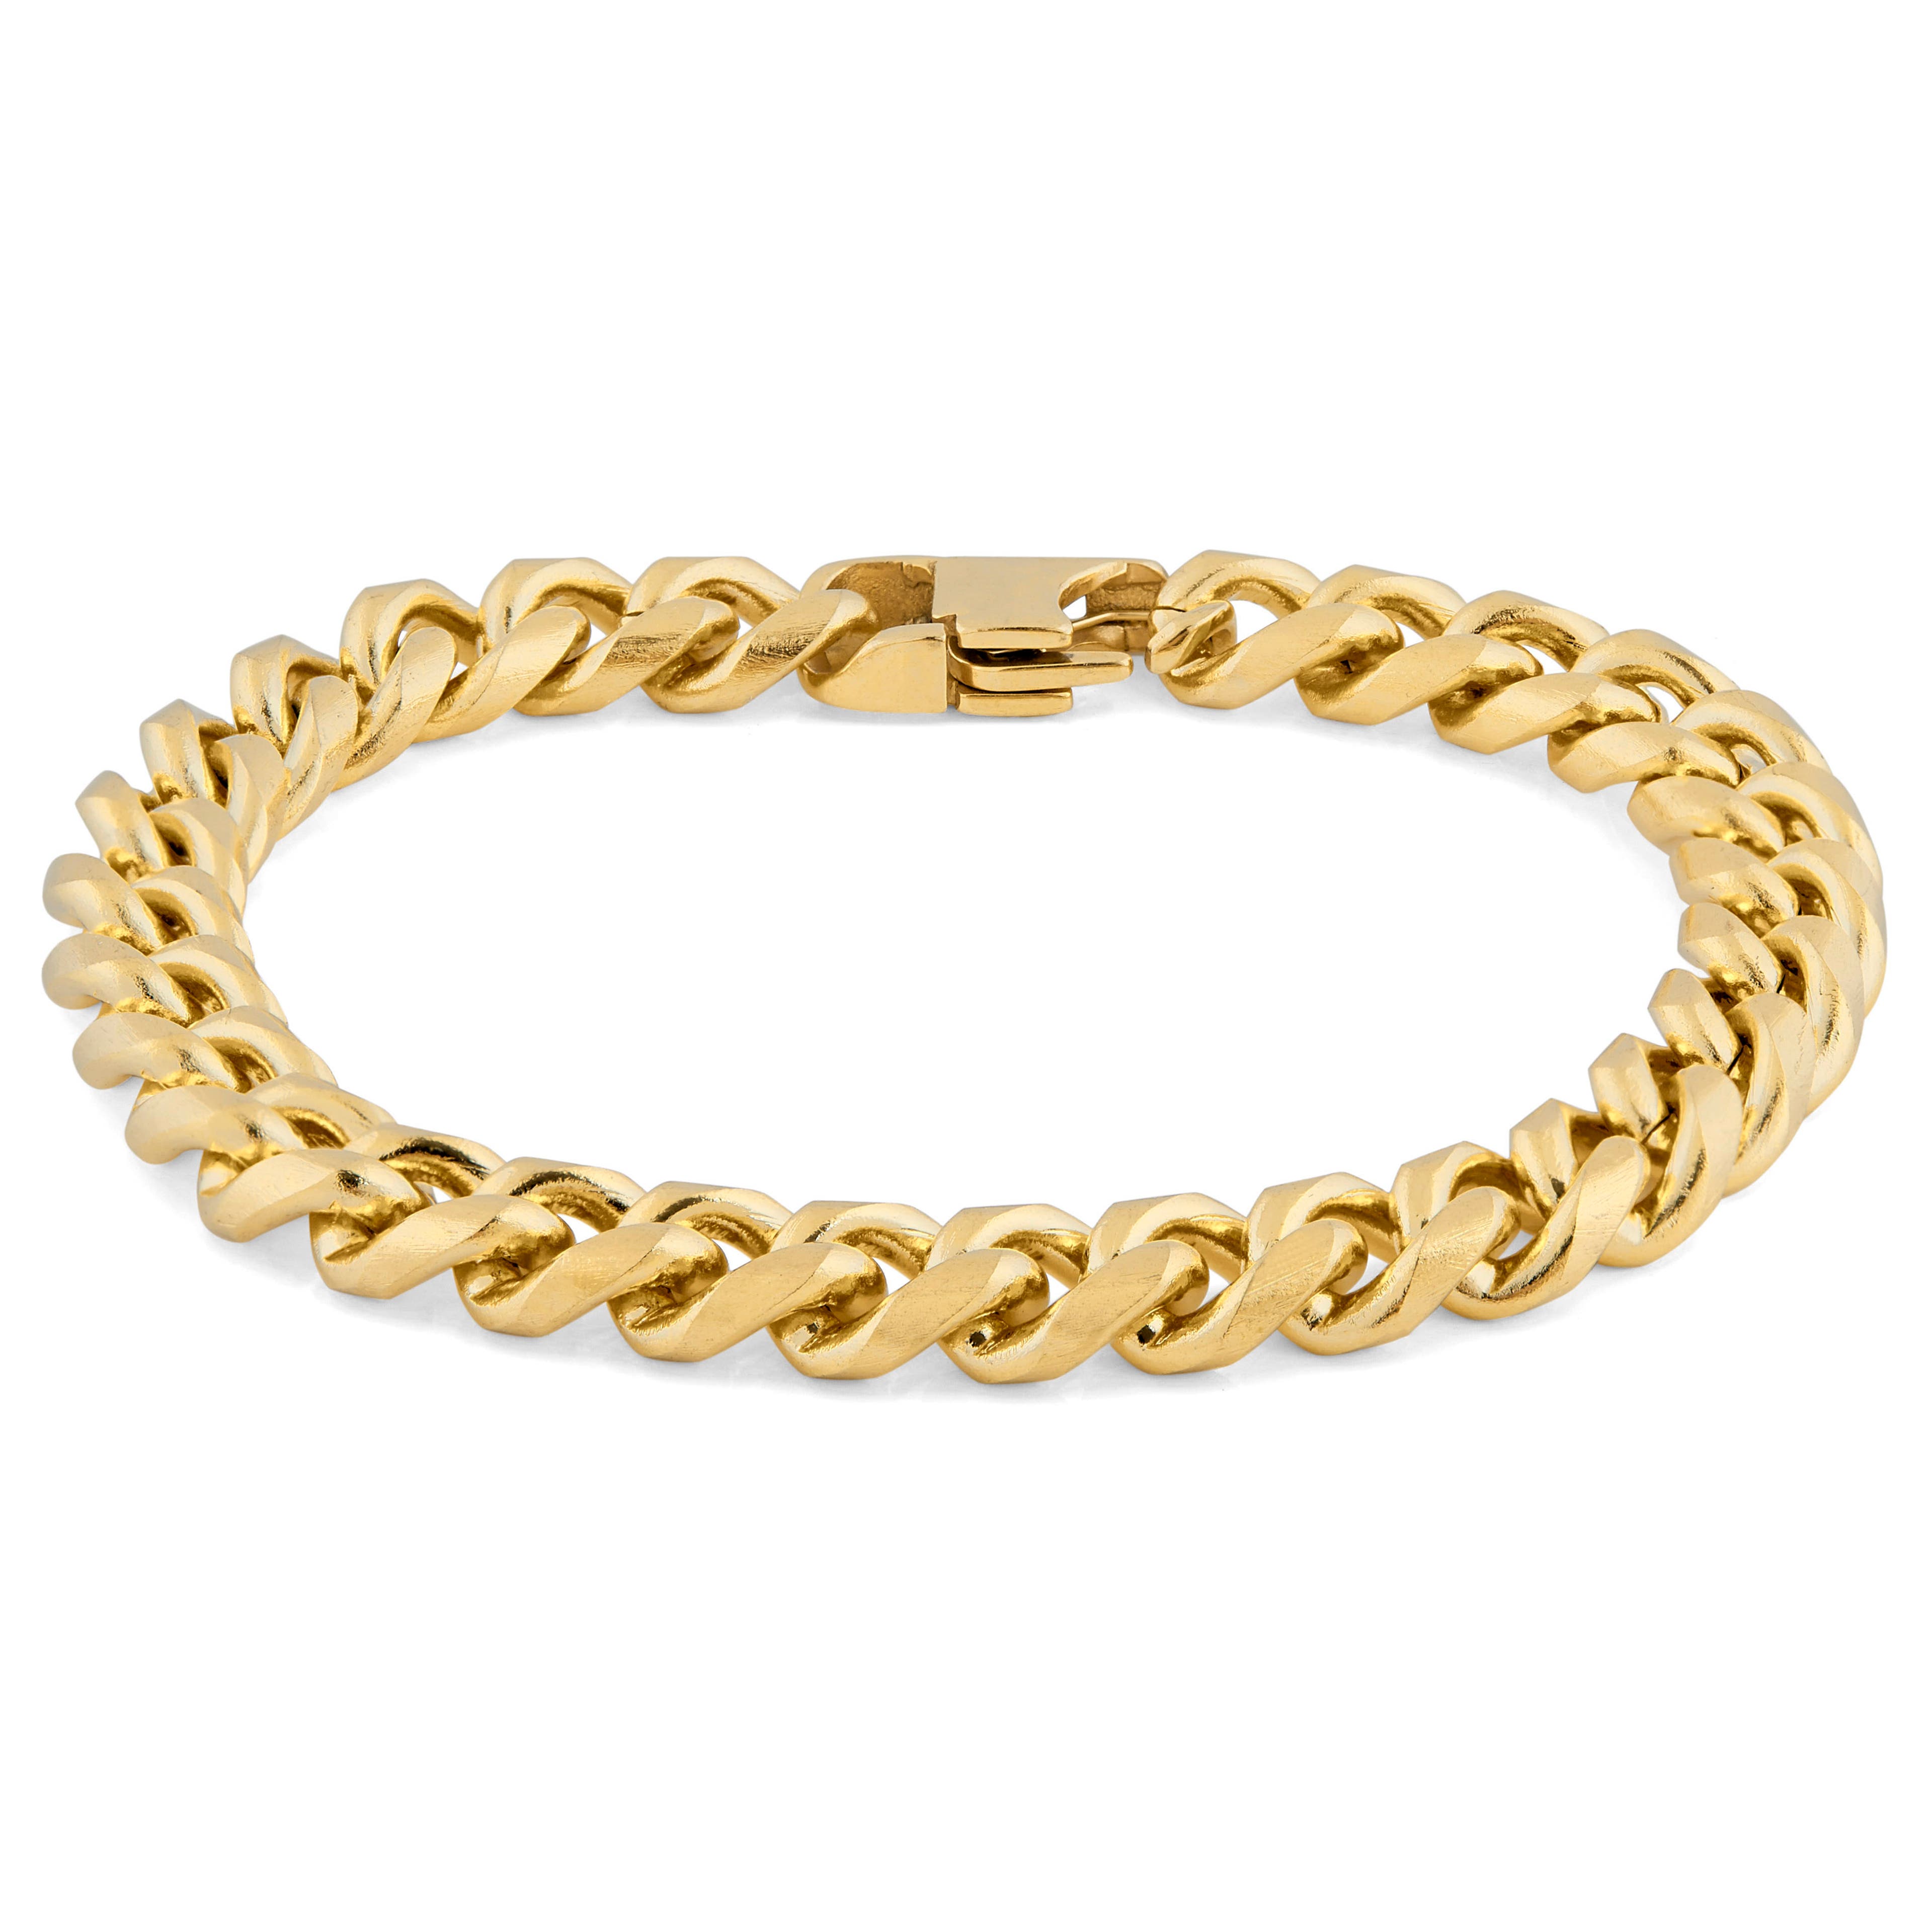 8mm Gold-Tone Chain Bracelet